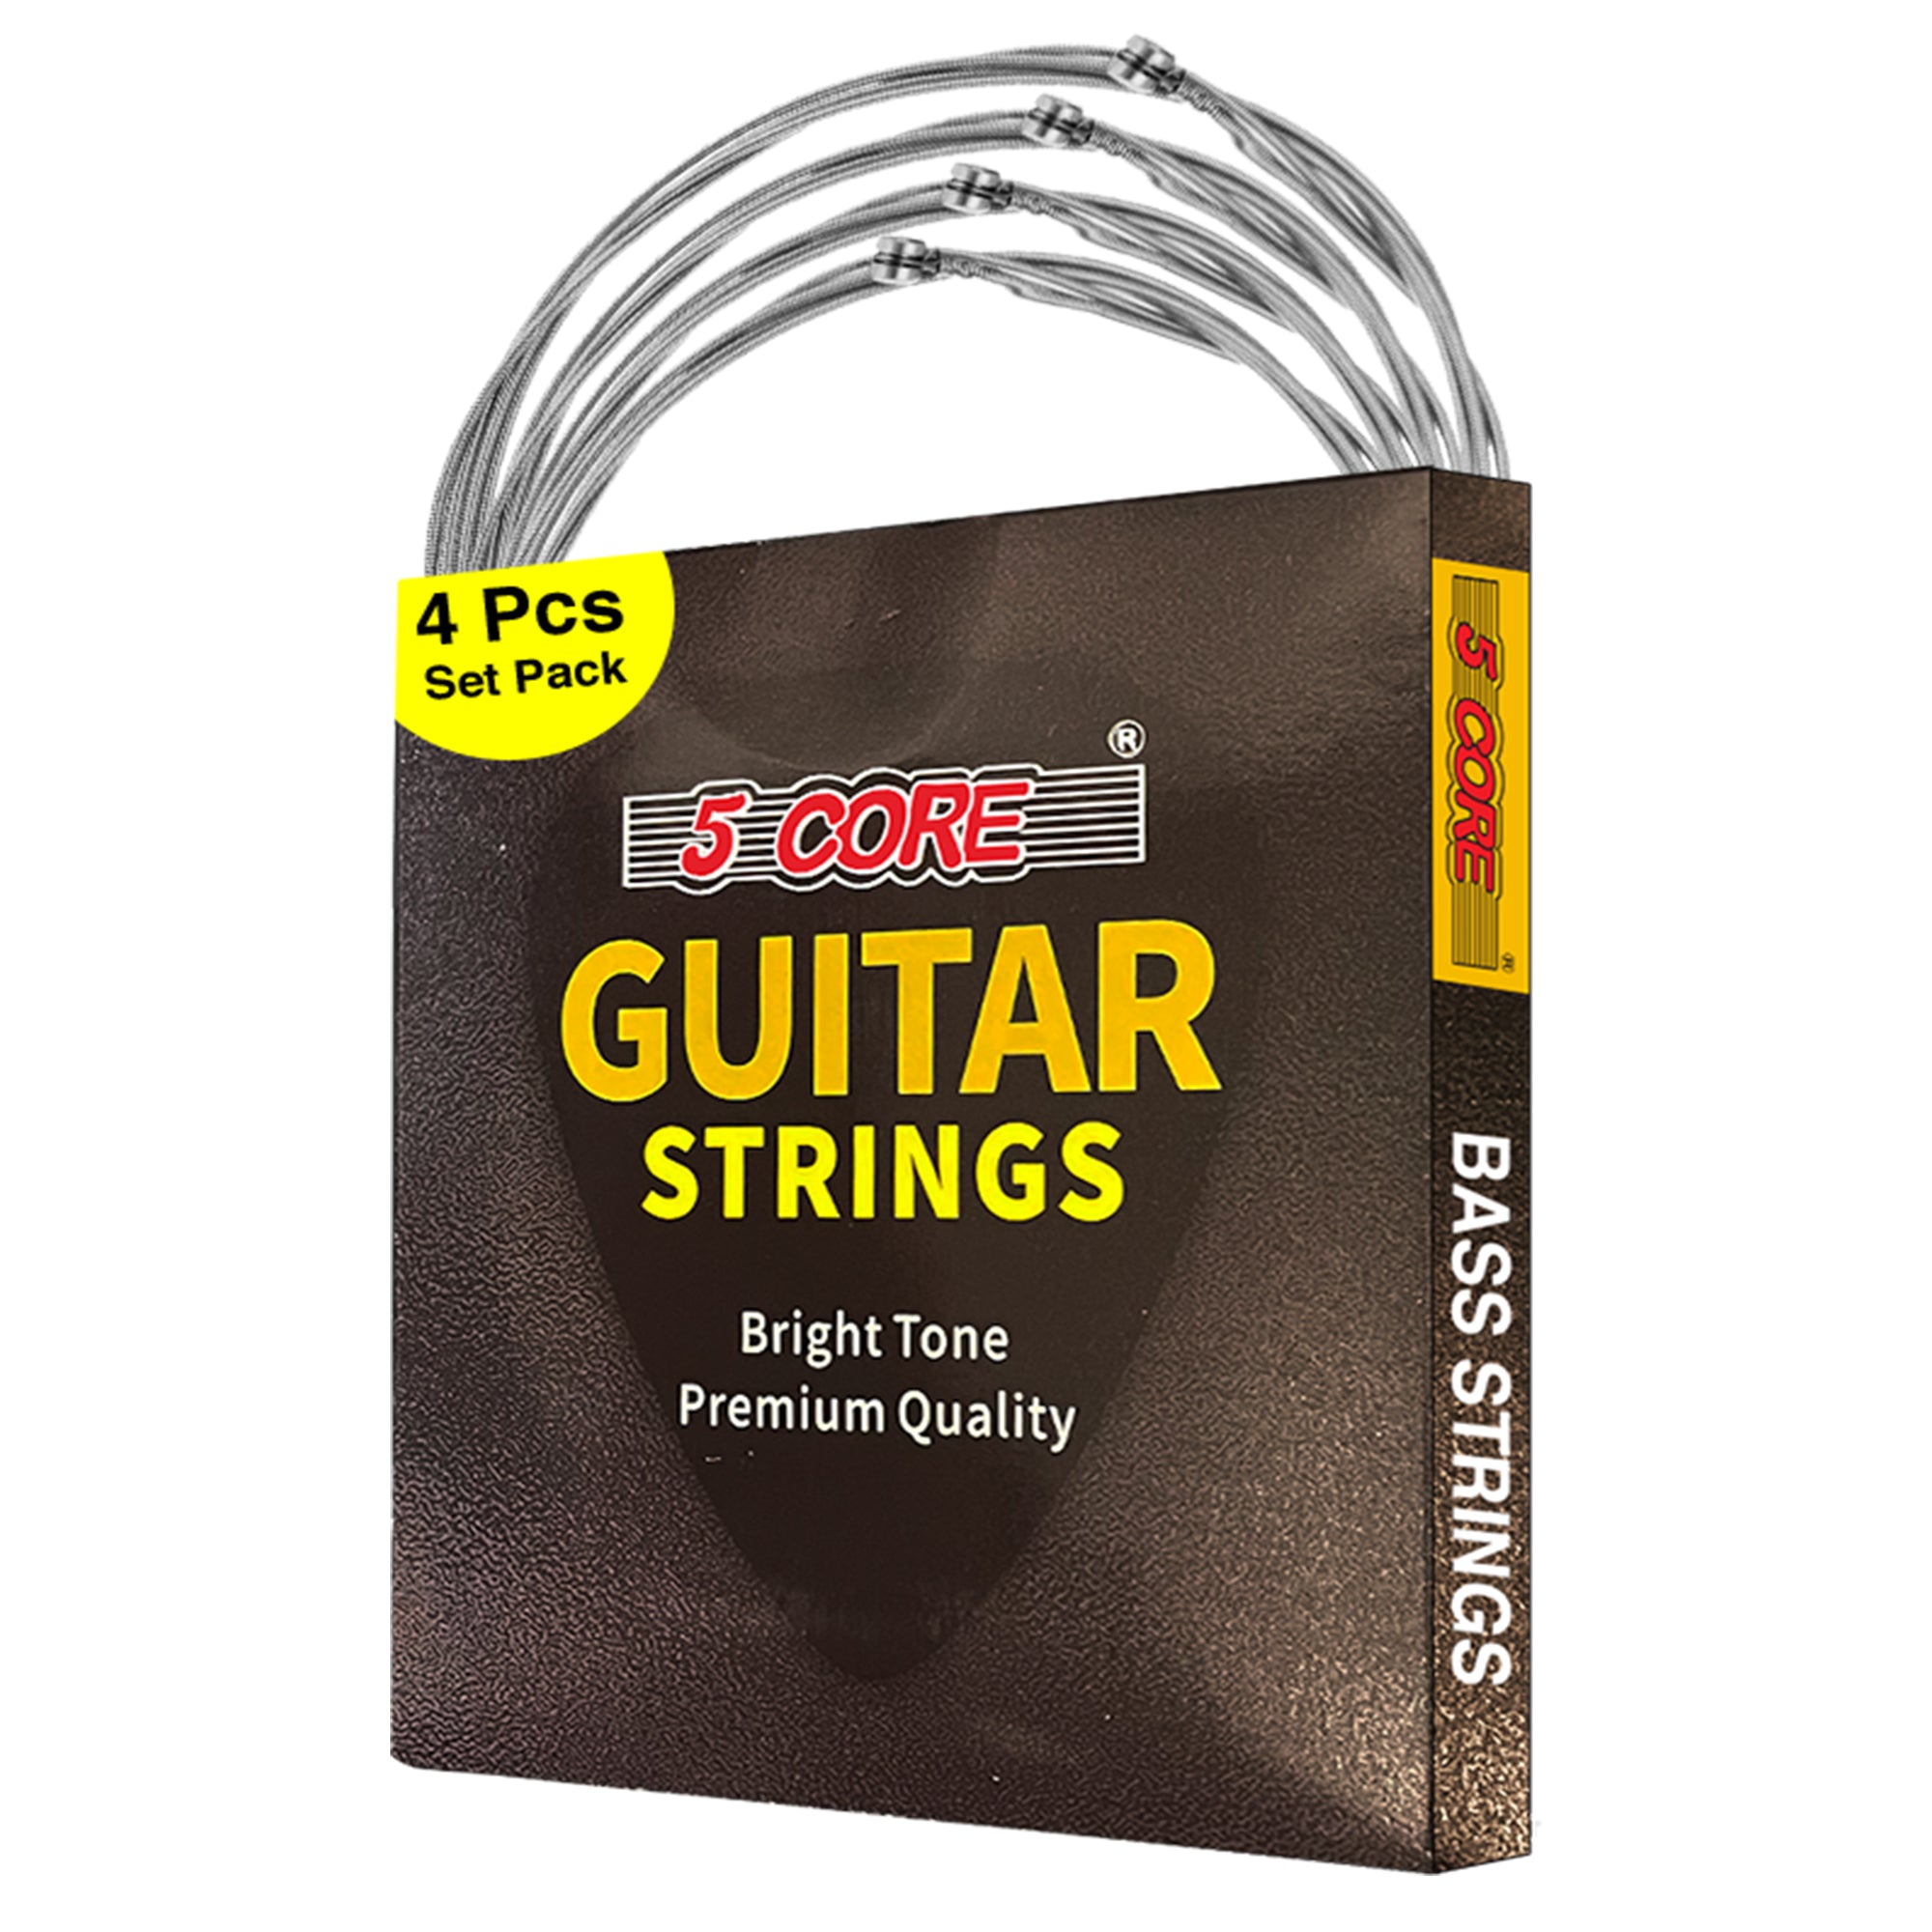 5 Core Bass Electric Guitar Strings Pure Nickel Guitar String Gauge .010 to .048 - GS EL BSS 4PCS